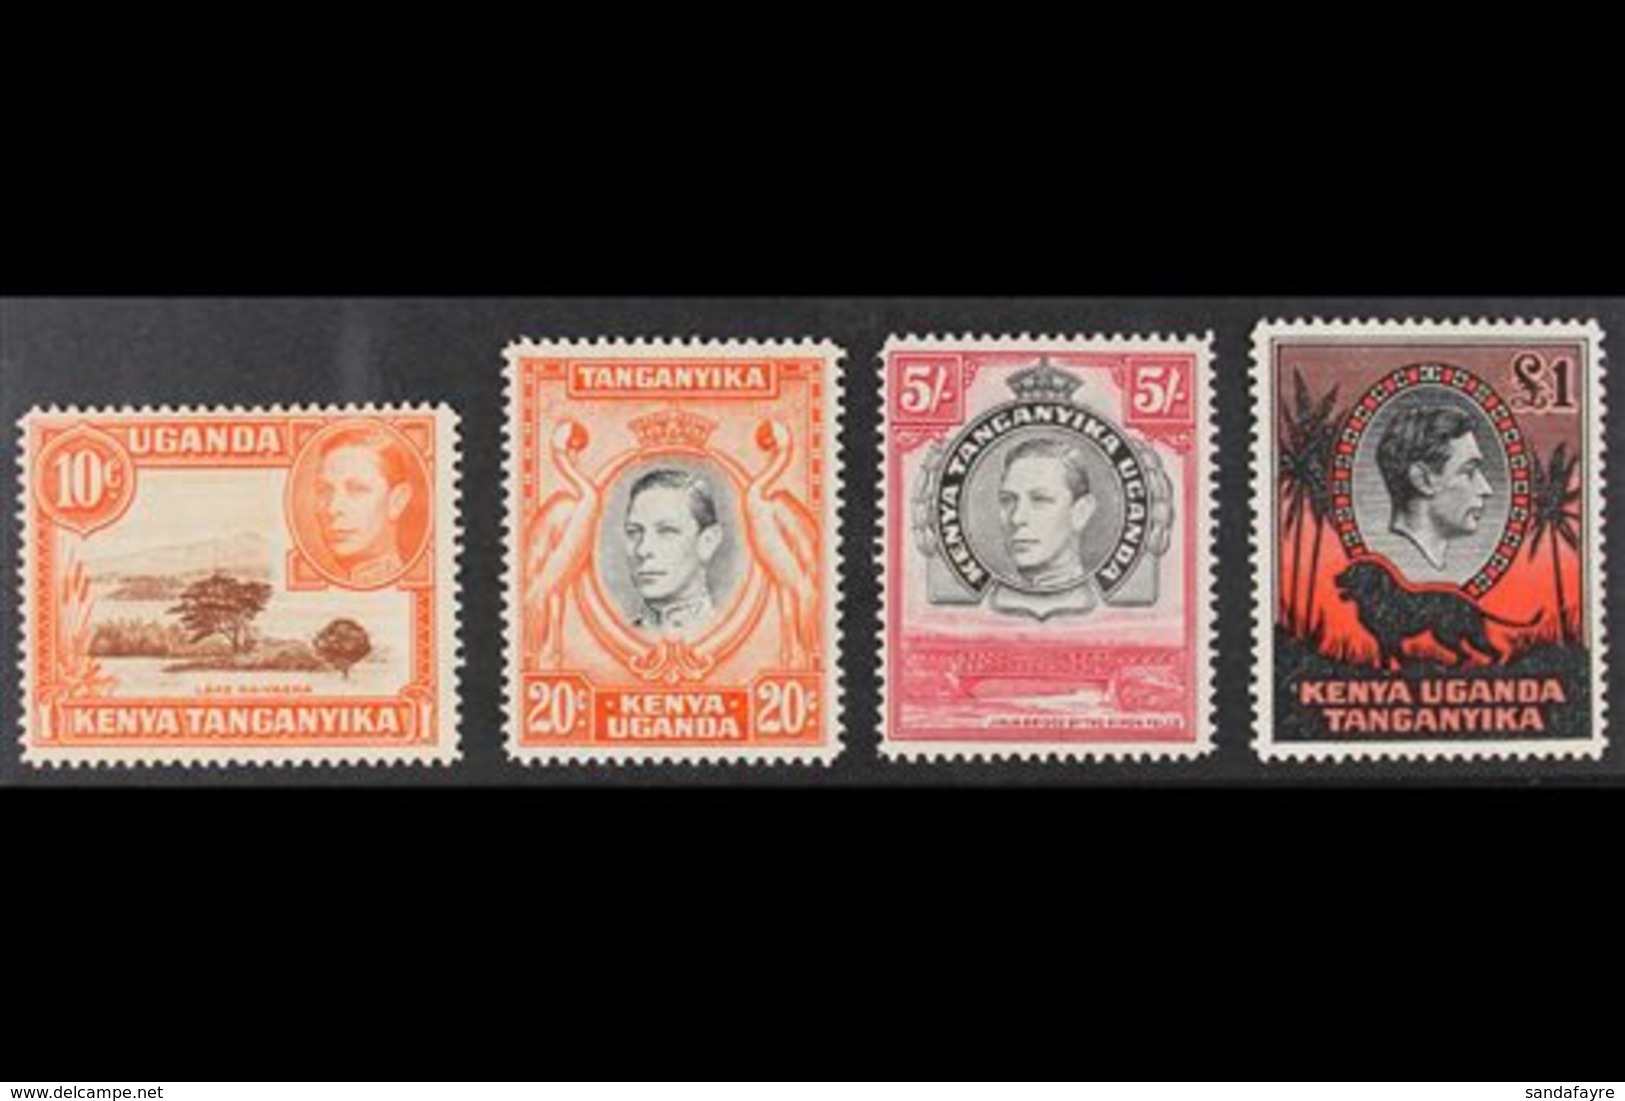 1941 DEFINITIVES PERF 14 10c Red-brown And Orange (SG 134b), 20c (SG 139a), 5s (SG 148a), And £1 (SG 150a), Fine Fresh M - Vide